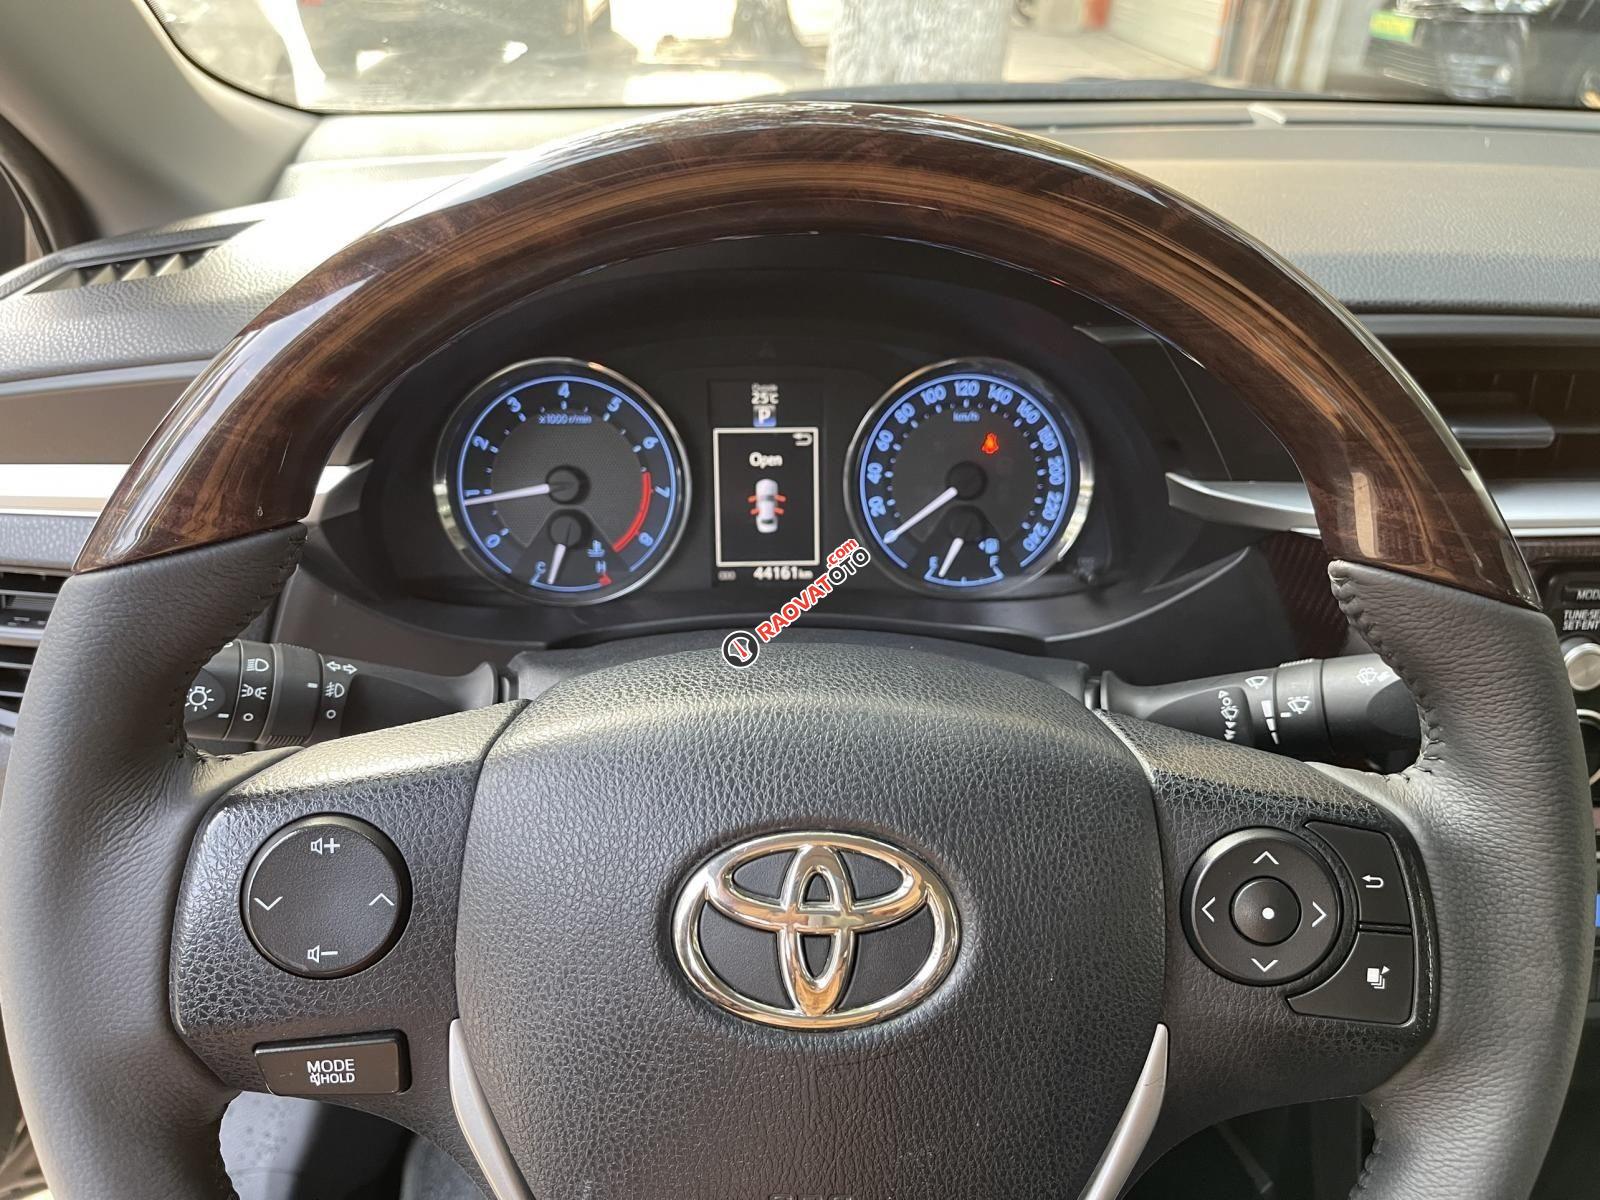 Bán gấp Toyota Corolla Altis 1.8G AT năm 2017, màu đen, còn nguyên dàn lốp, xe rất mới, giá tốt-12